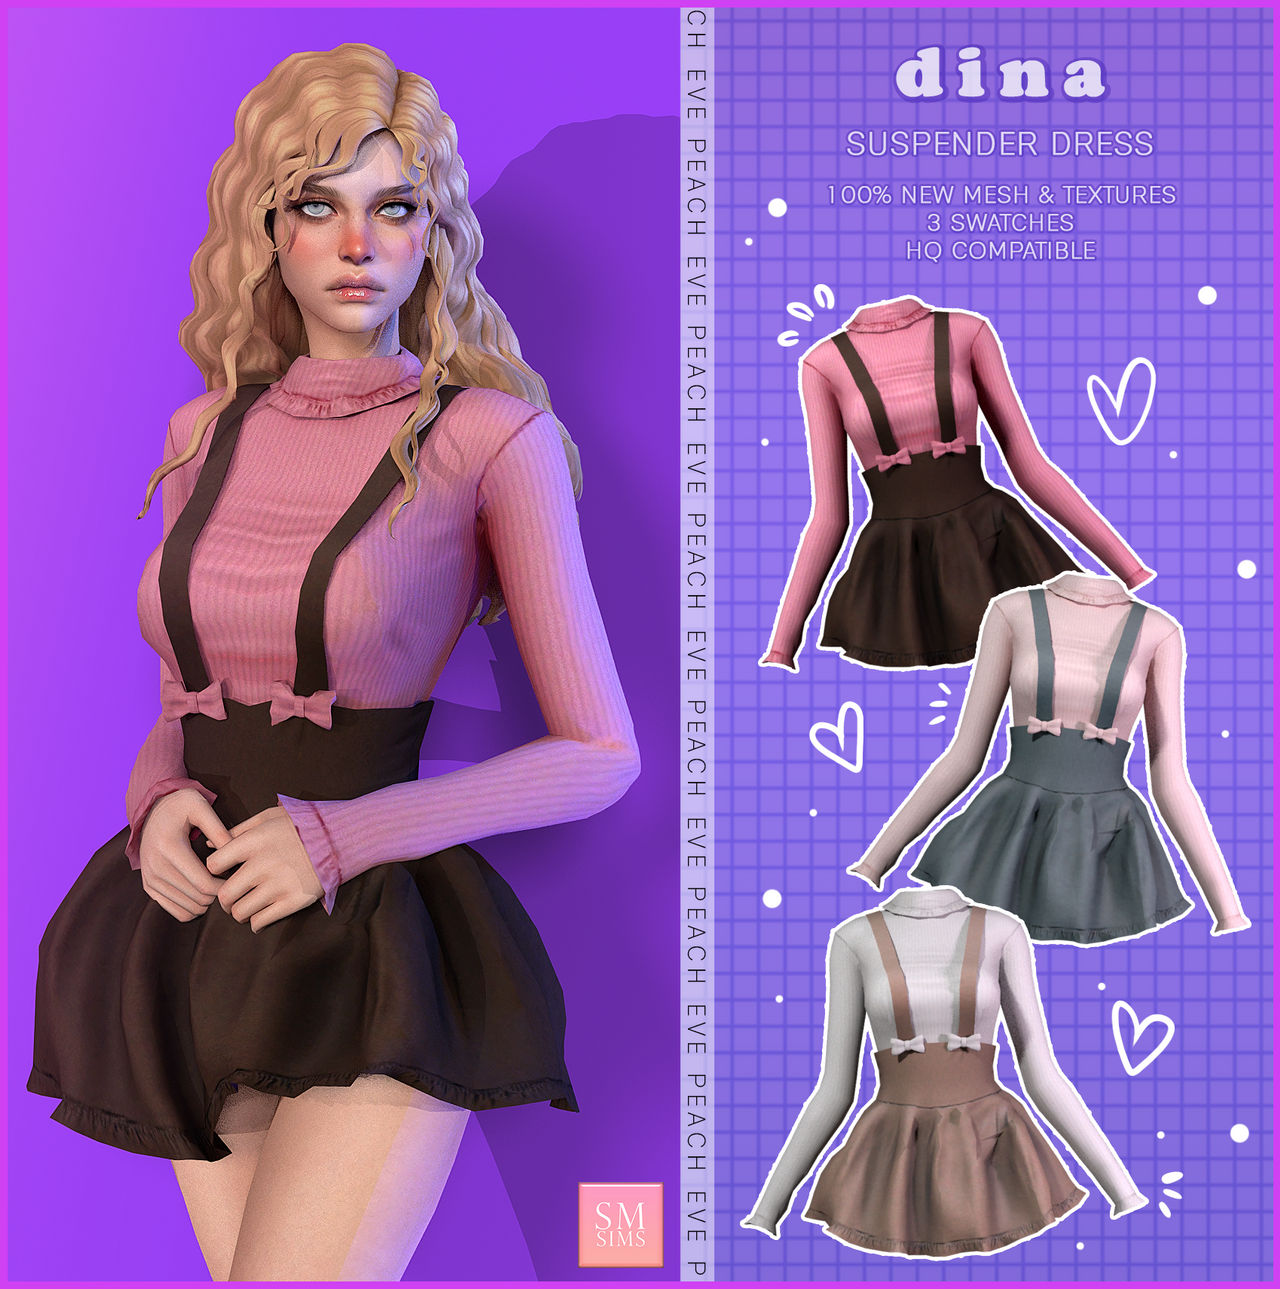 TS4 | Dina Suspender Dress by SMsims on DeviantArt